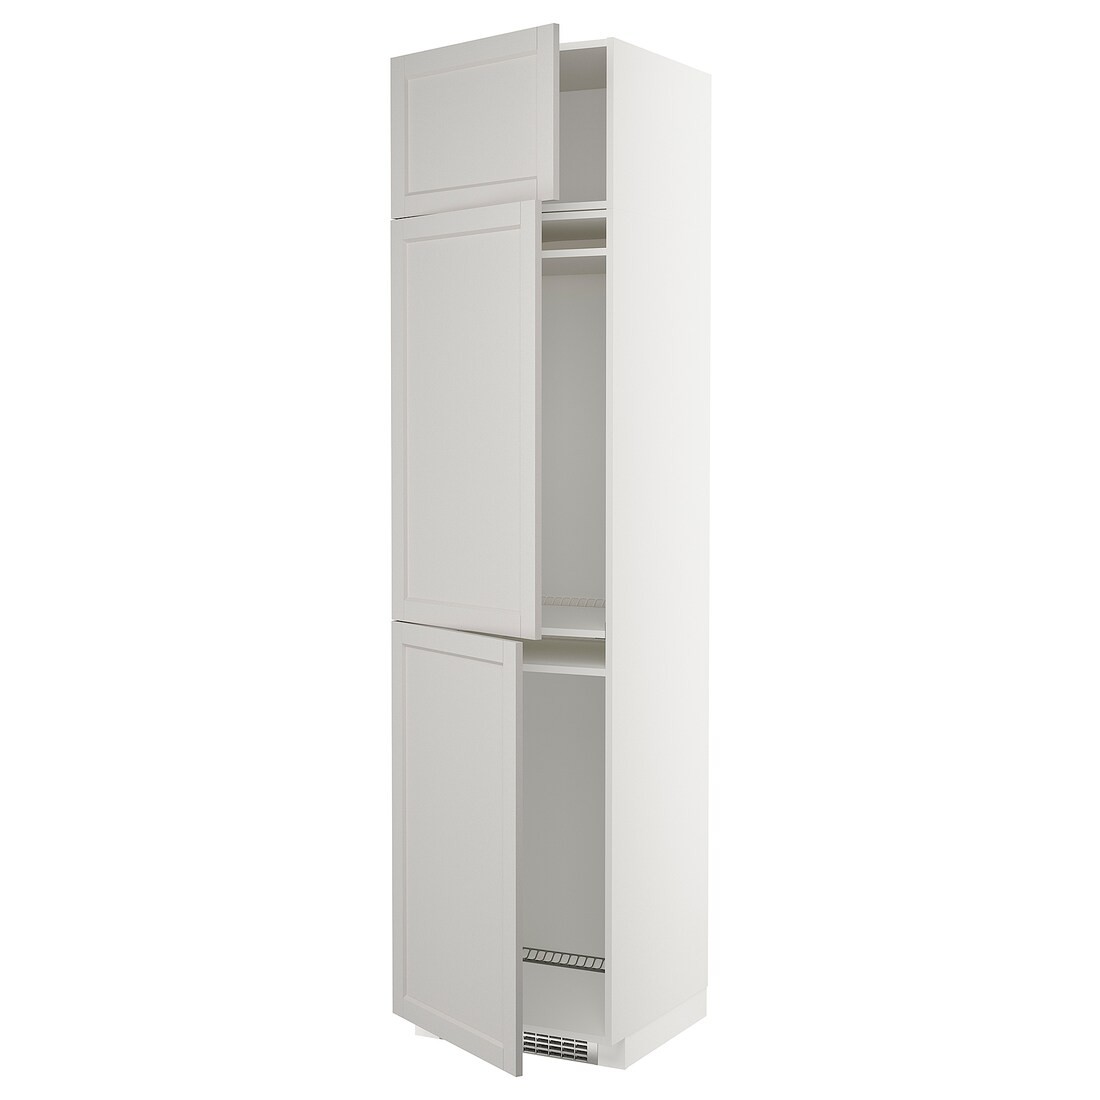 IKEA METOD МЕТОД Высокий шкаф для холодильника / морозильника / 3 дверцы, белый / Lerhyttan светло-серый, 60x60x240 см 19464537 194.645.37